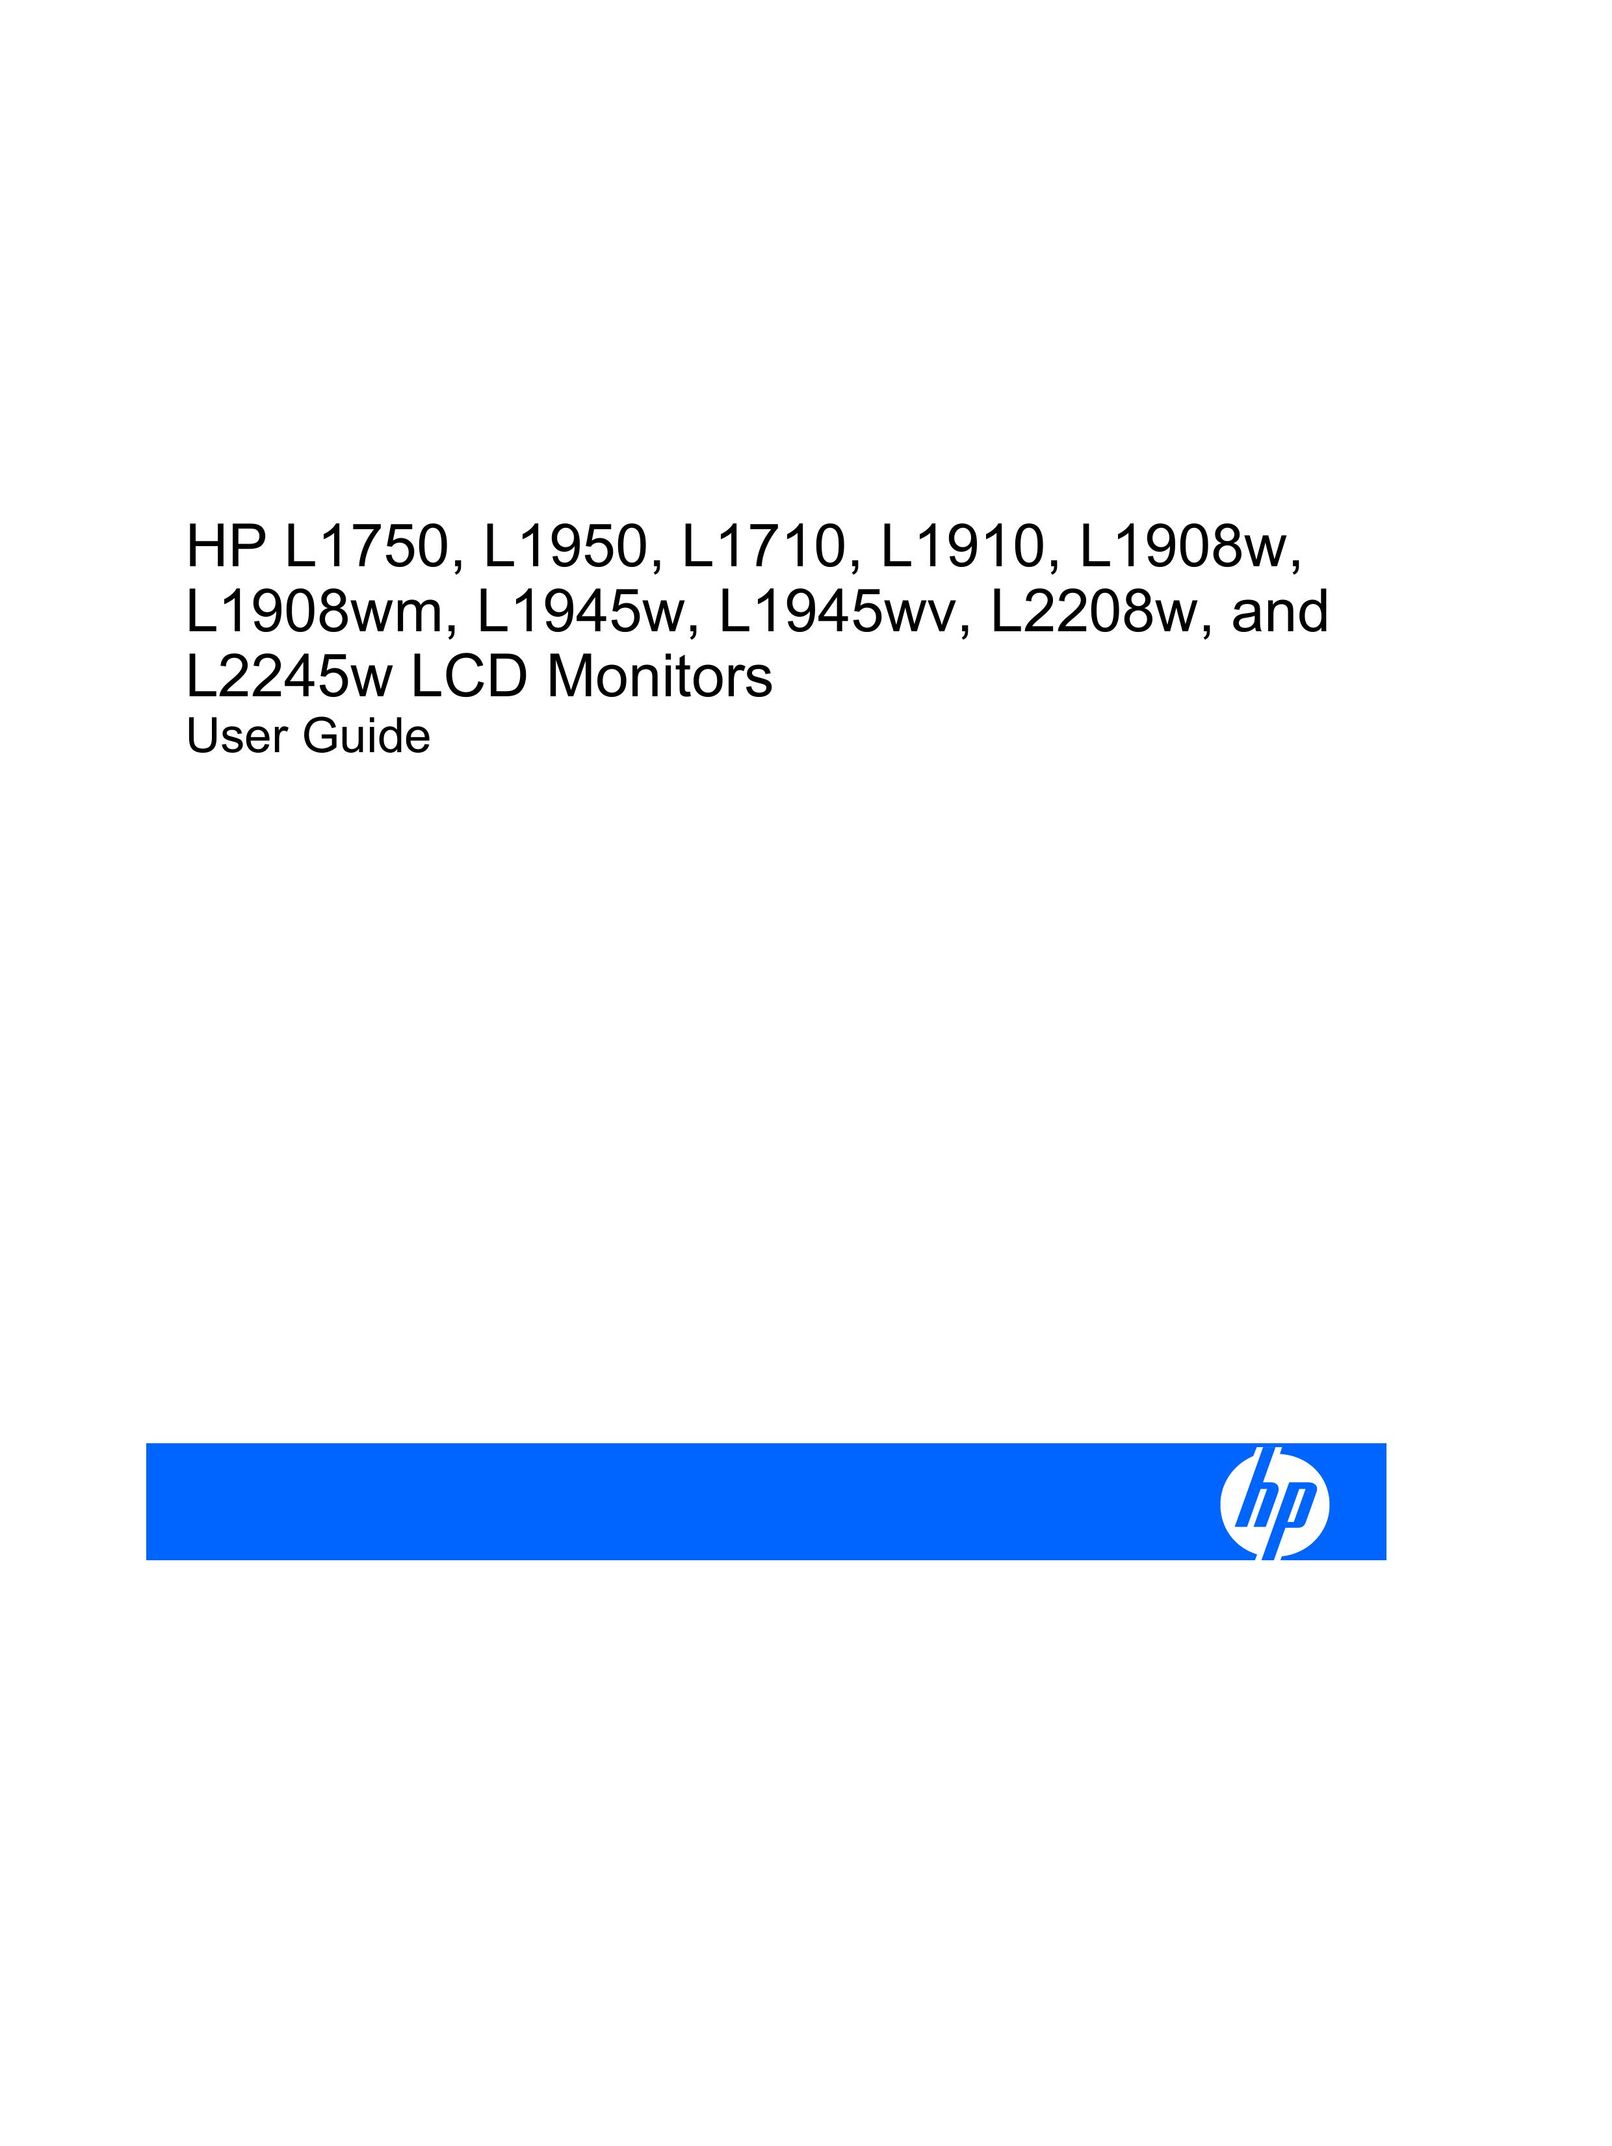 HP (Hewlett-Packard) L1710 Flat Panel Television User Manual